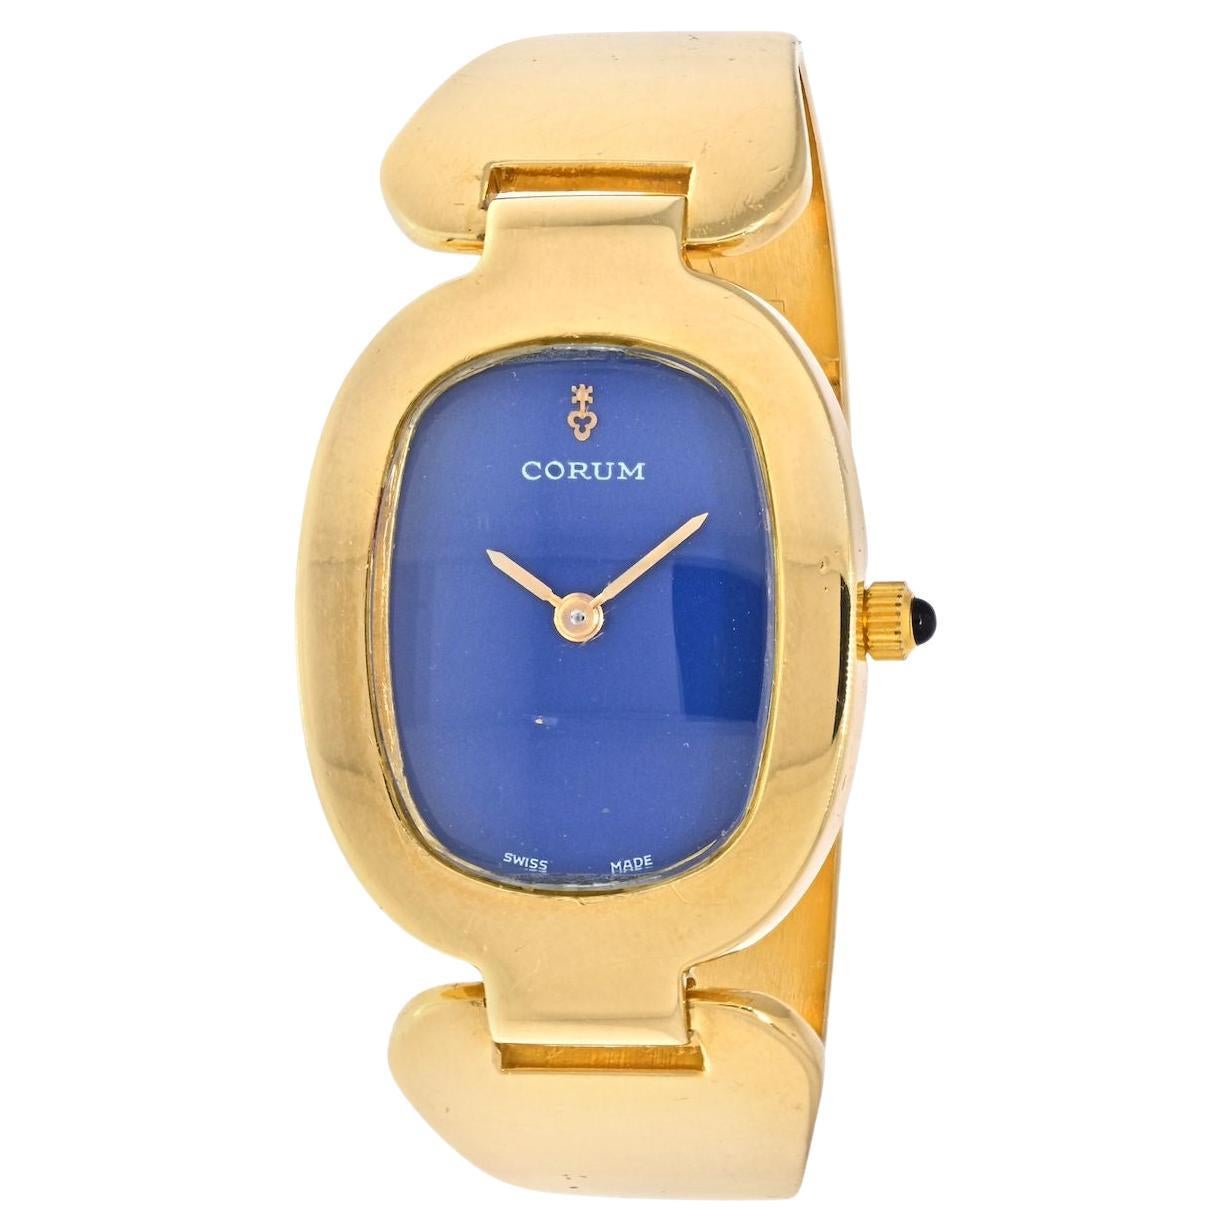 Corum 18K Yellow Gold Oval Blue Dial Wrist Watch